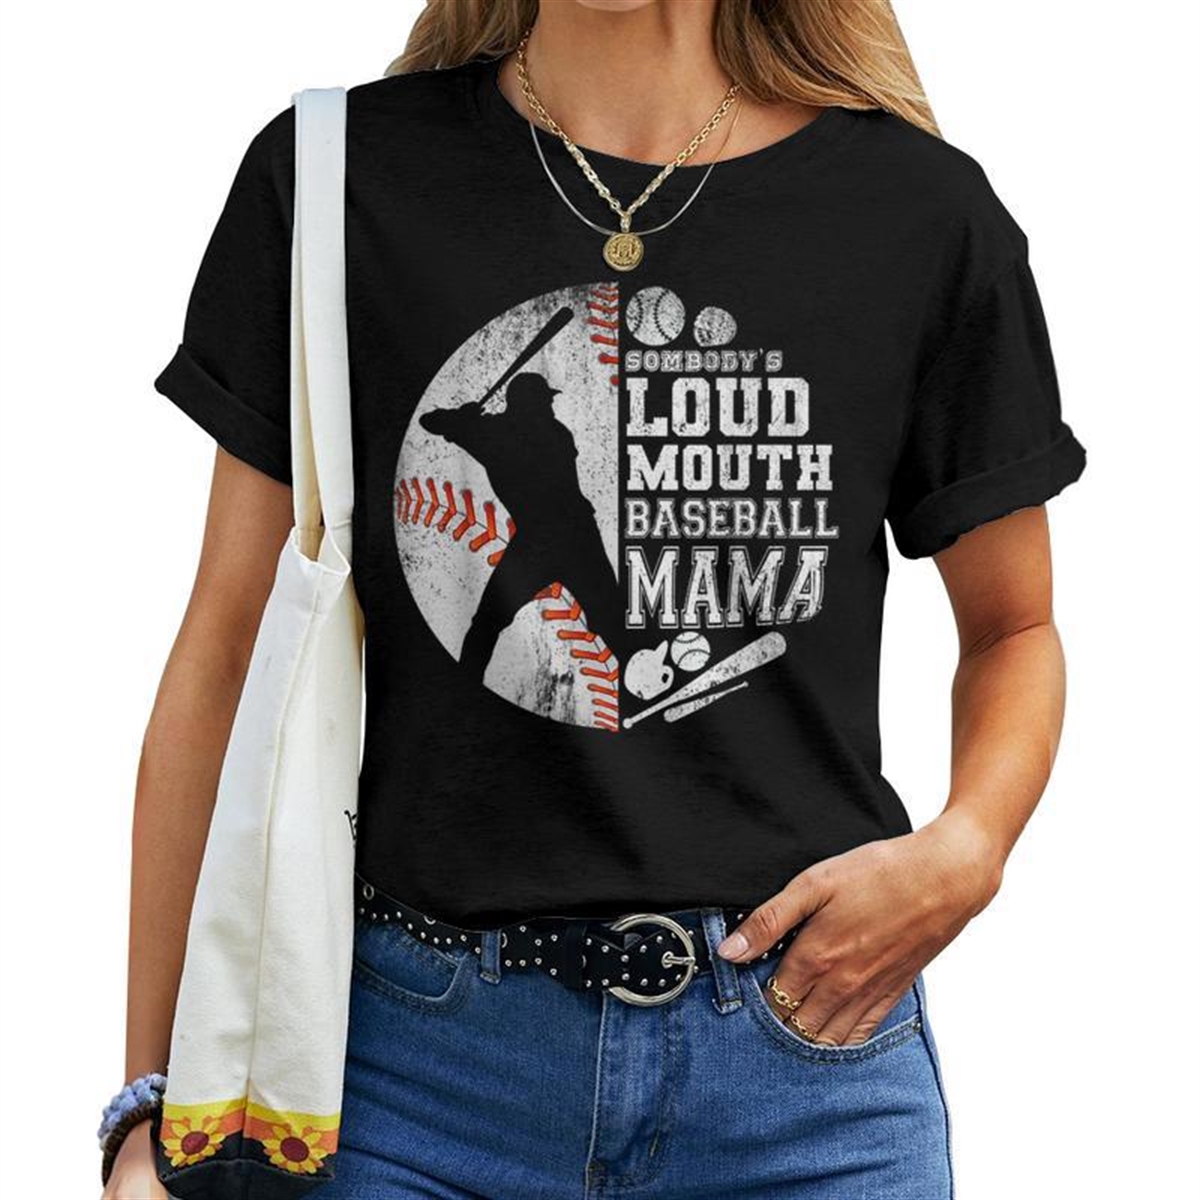 Baseball Somebodys Loud Mouth Baseball Mama For Mama Women T-shirt Crewneck